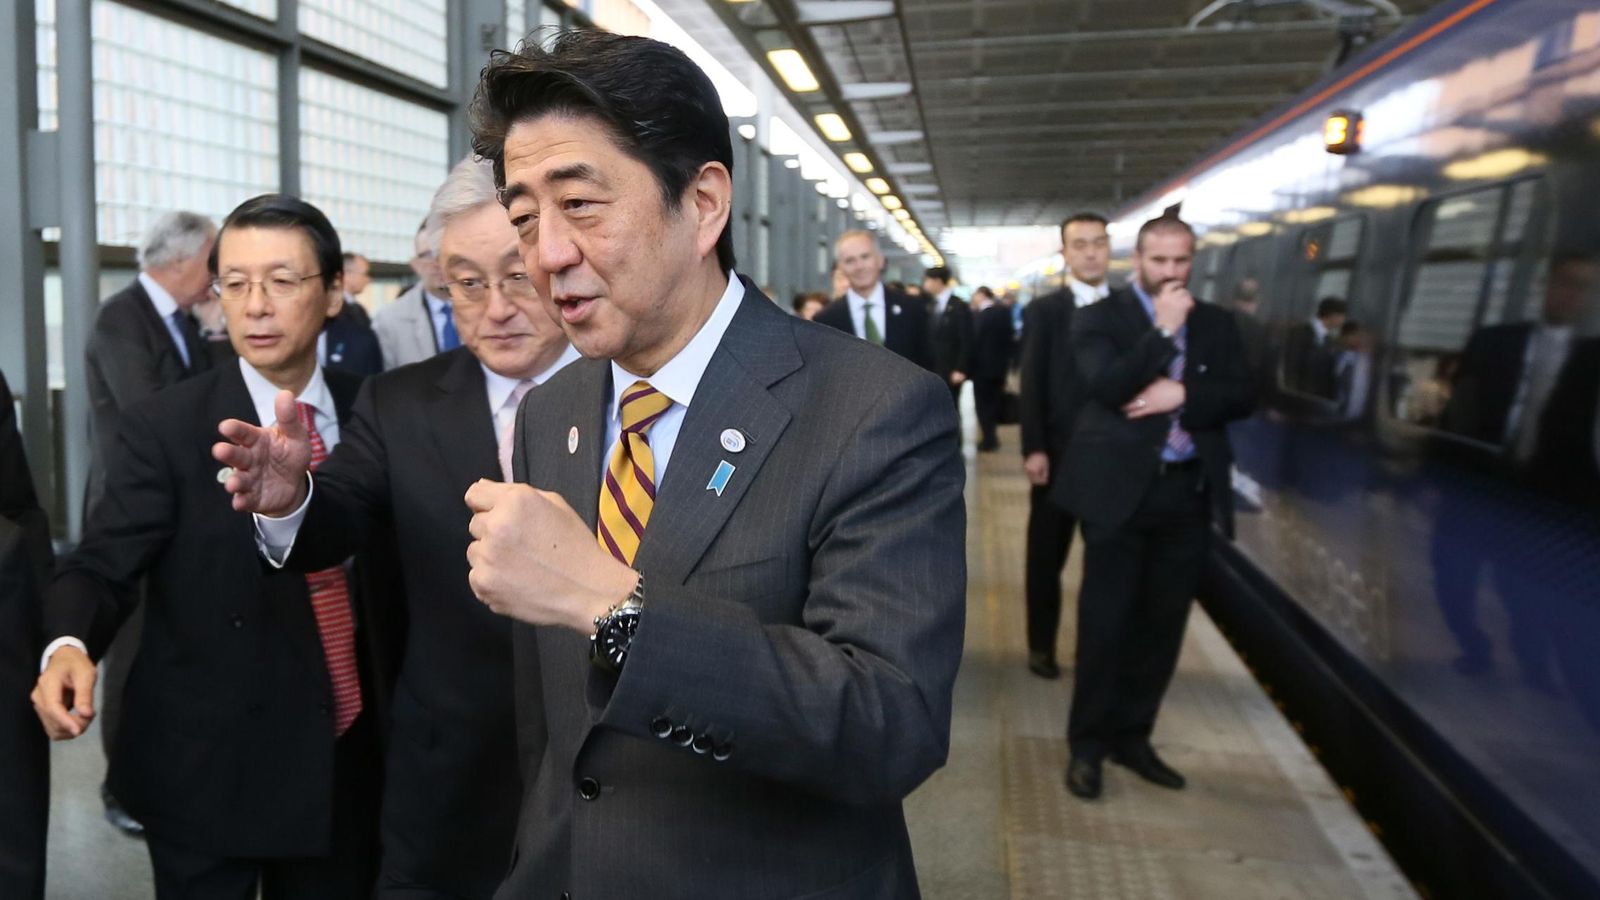 Foto: El primer ministro japonés, Shinzo Abe, en la estación de tren londinense de St. Pancras. (Reuters)